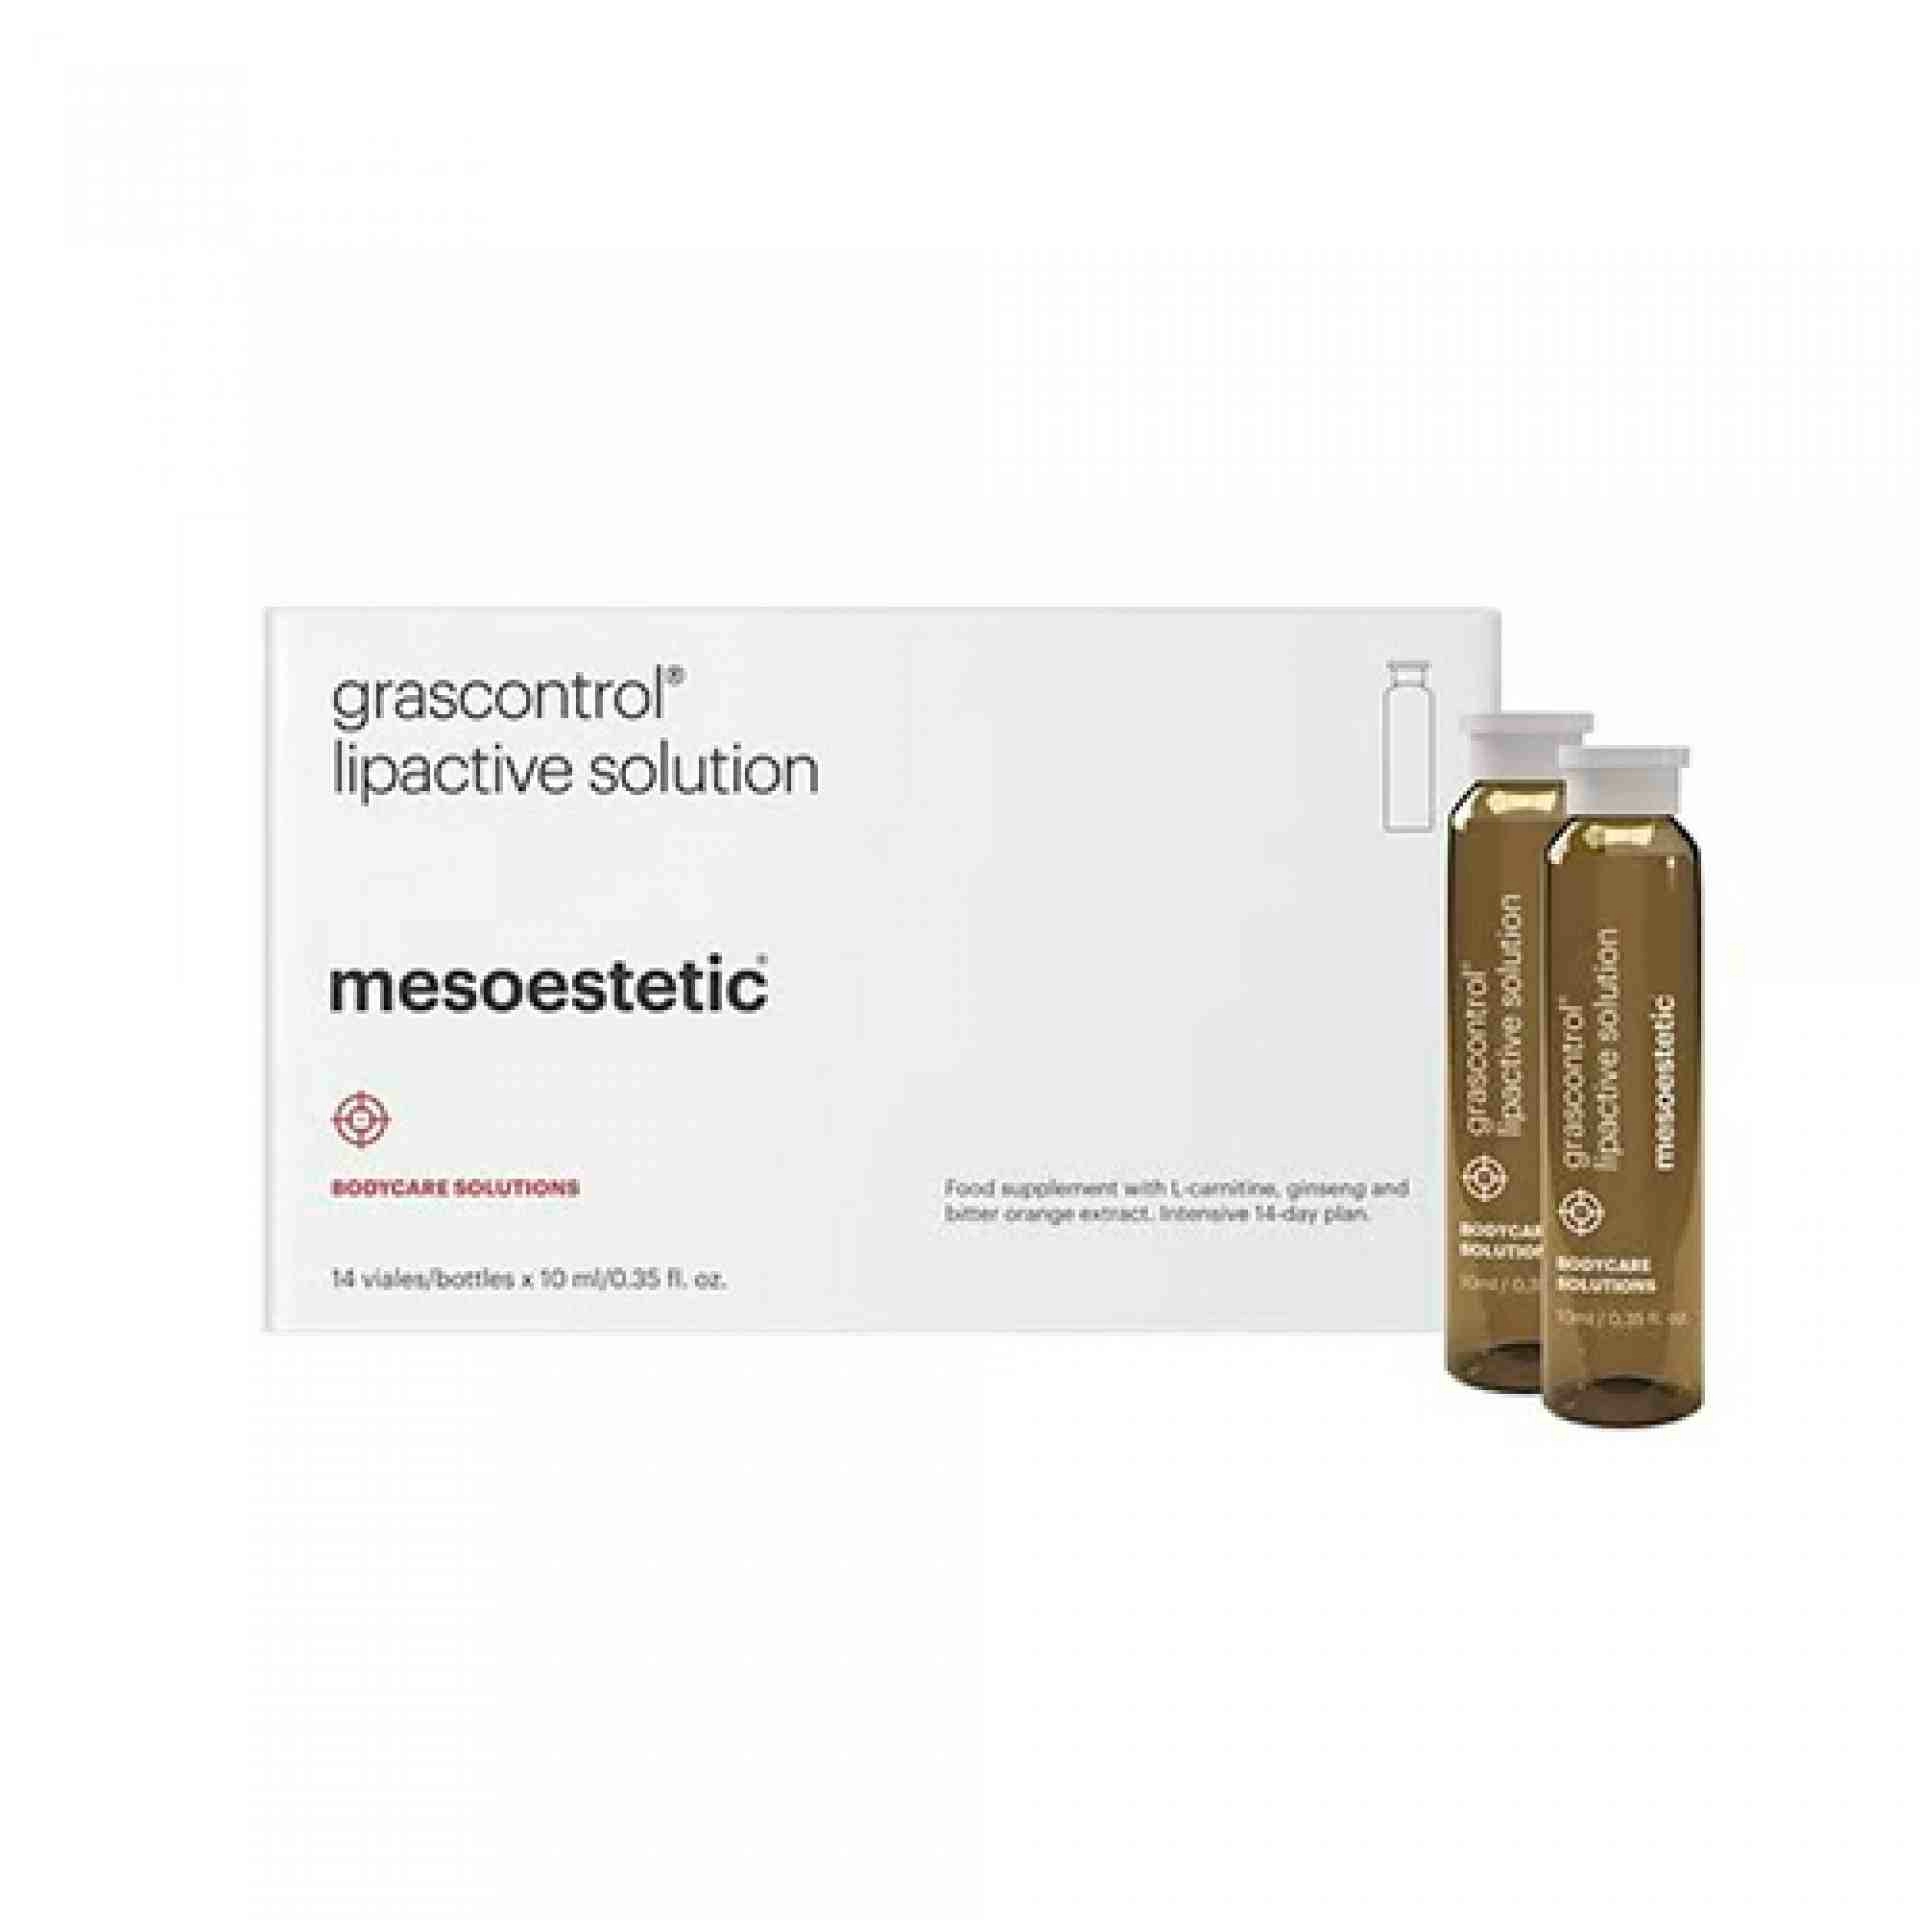 lipactive solution | complemento alimenticio antigrasas 14x10 ml - grascontrol - mesoestetic ®